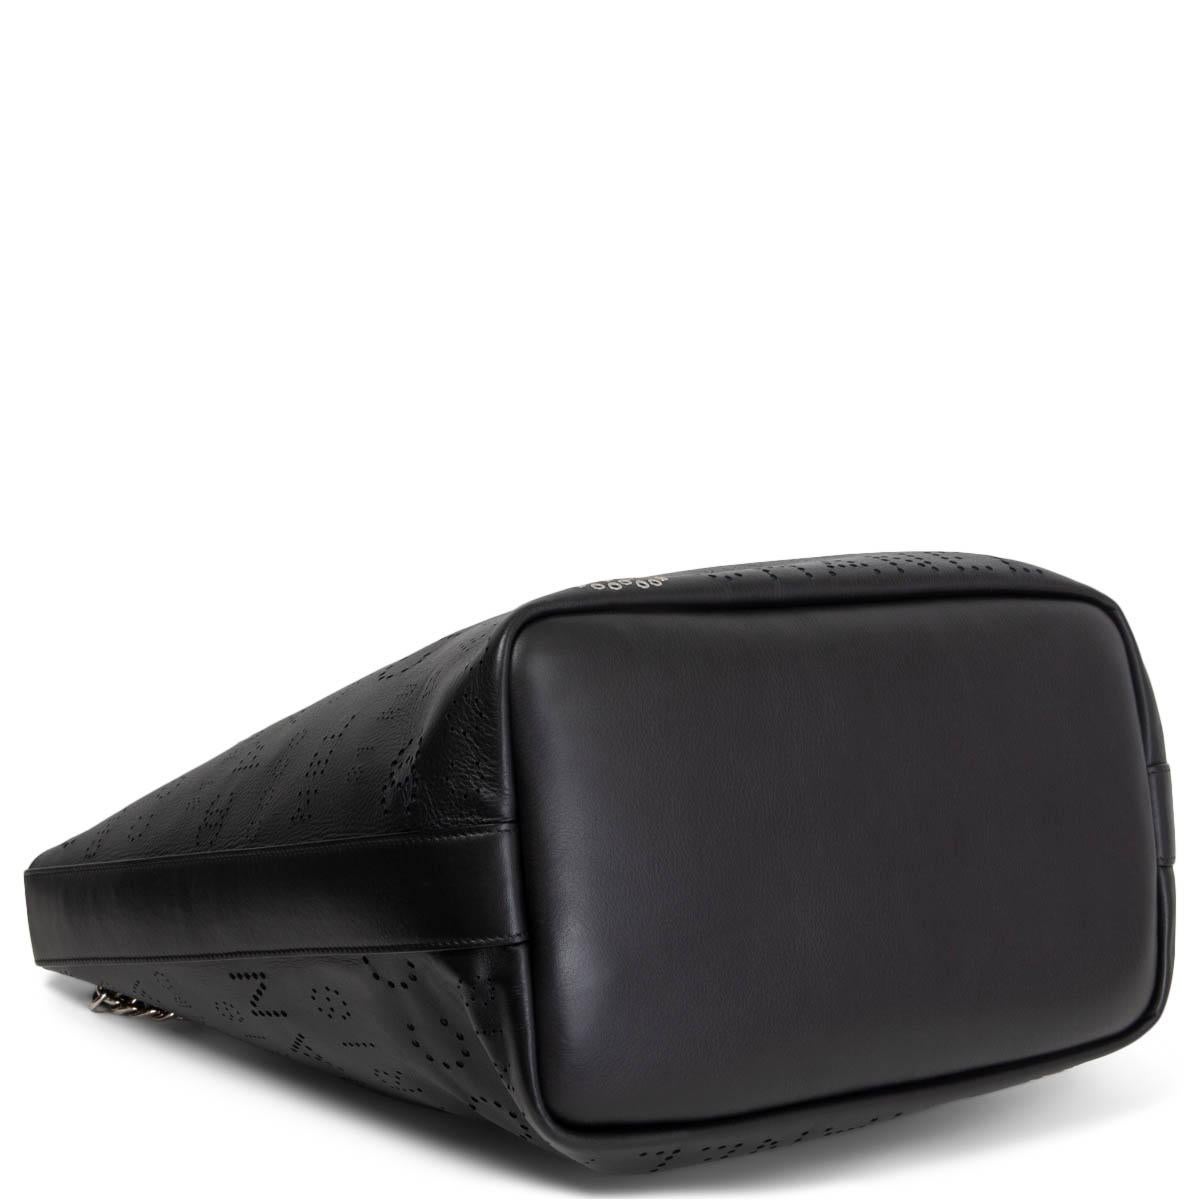 Black CHANEL black leather 2019 PERFORATED LOGO EYELET SMALL SHOPPING Bag